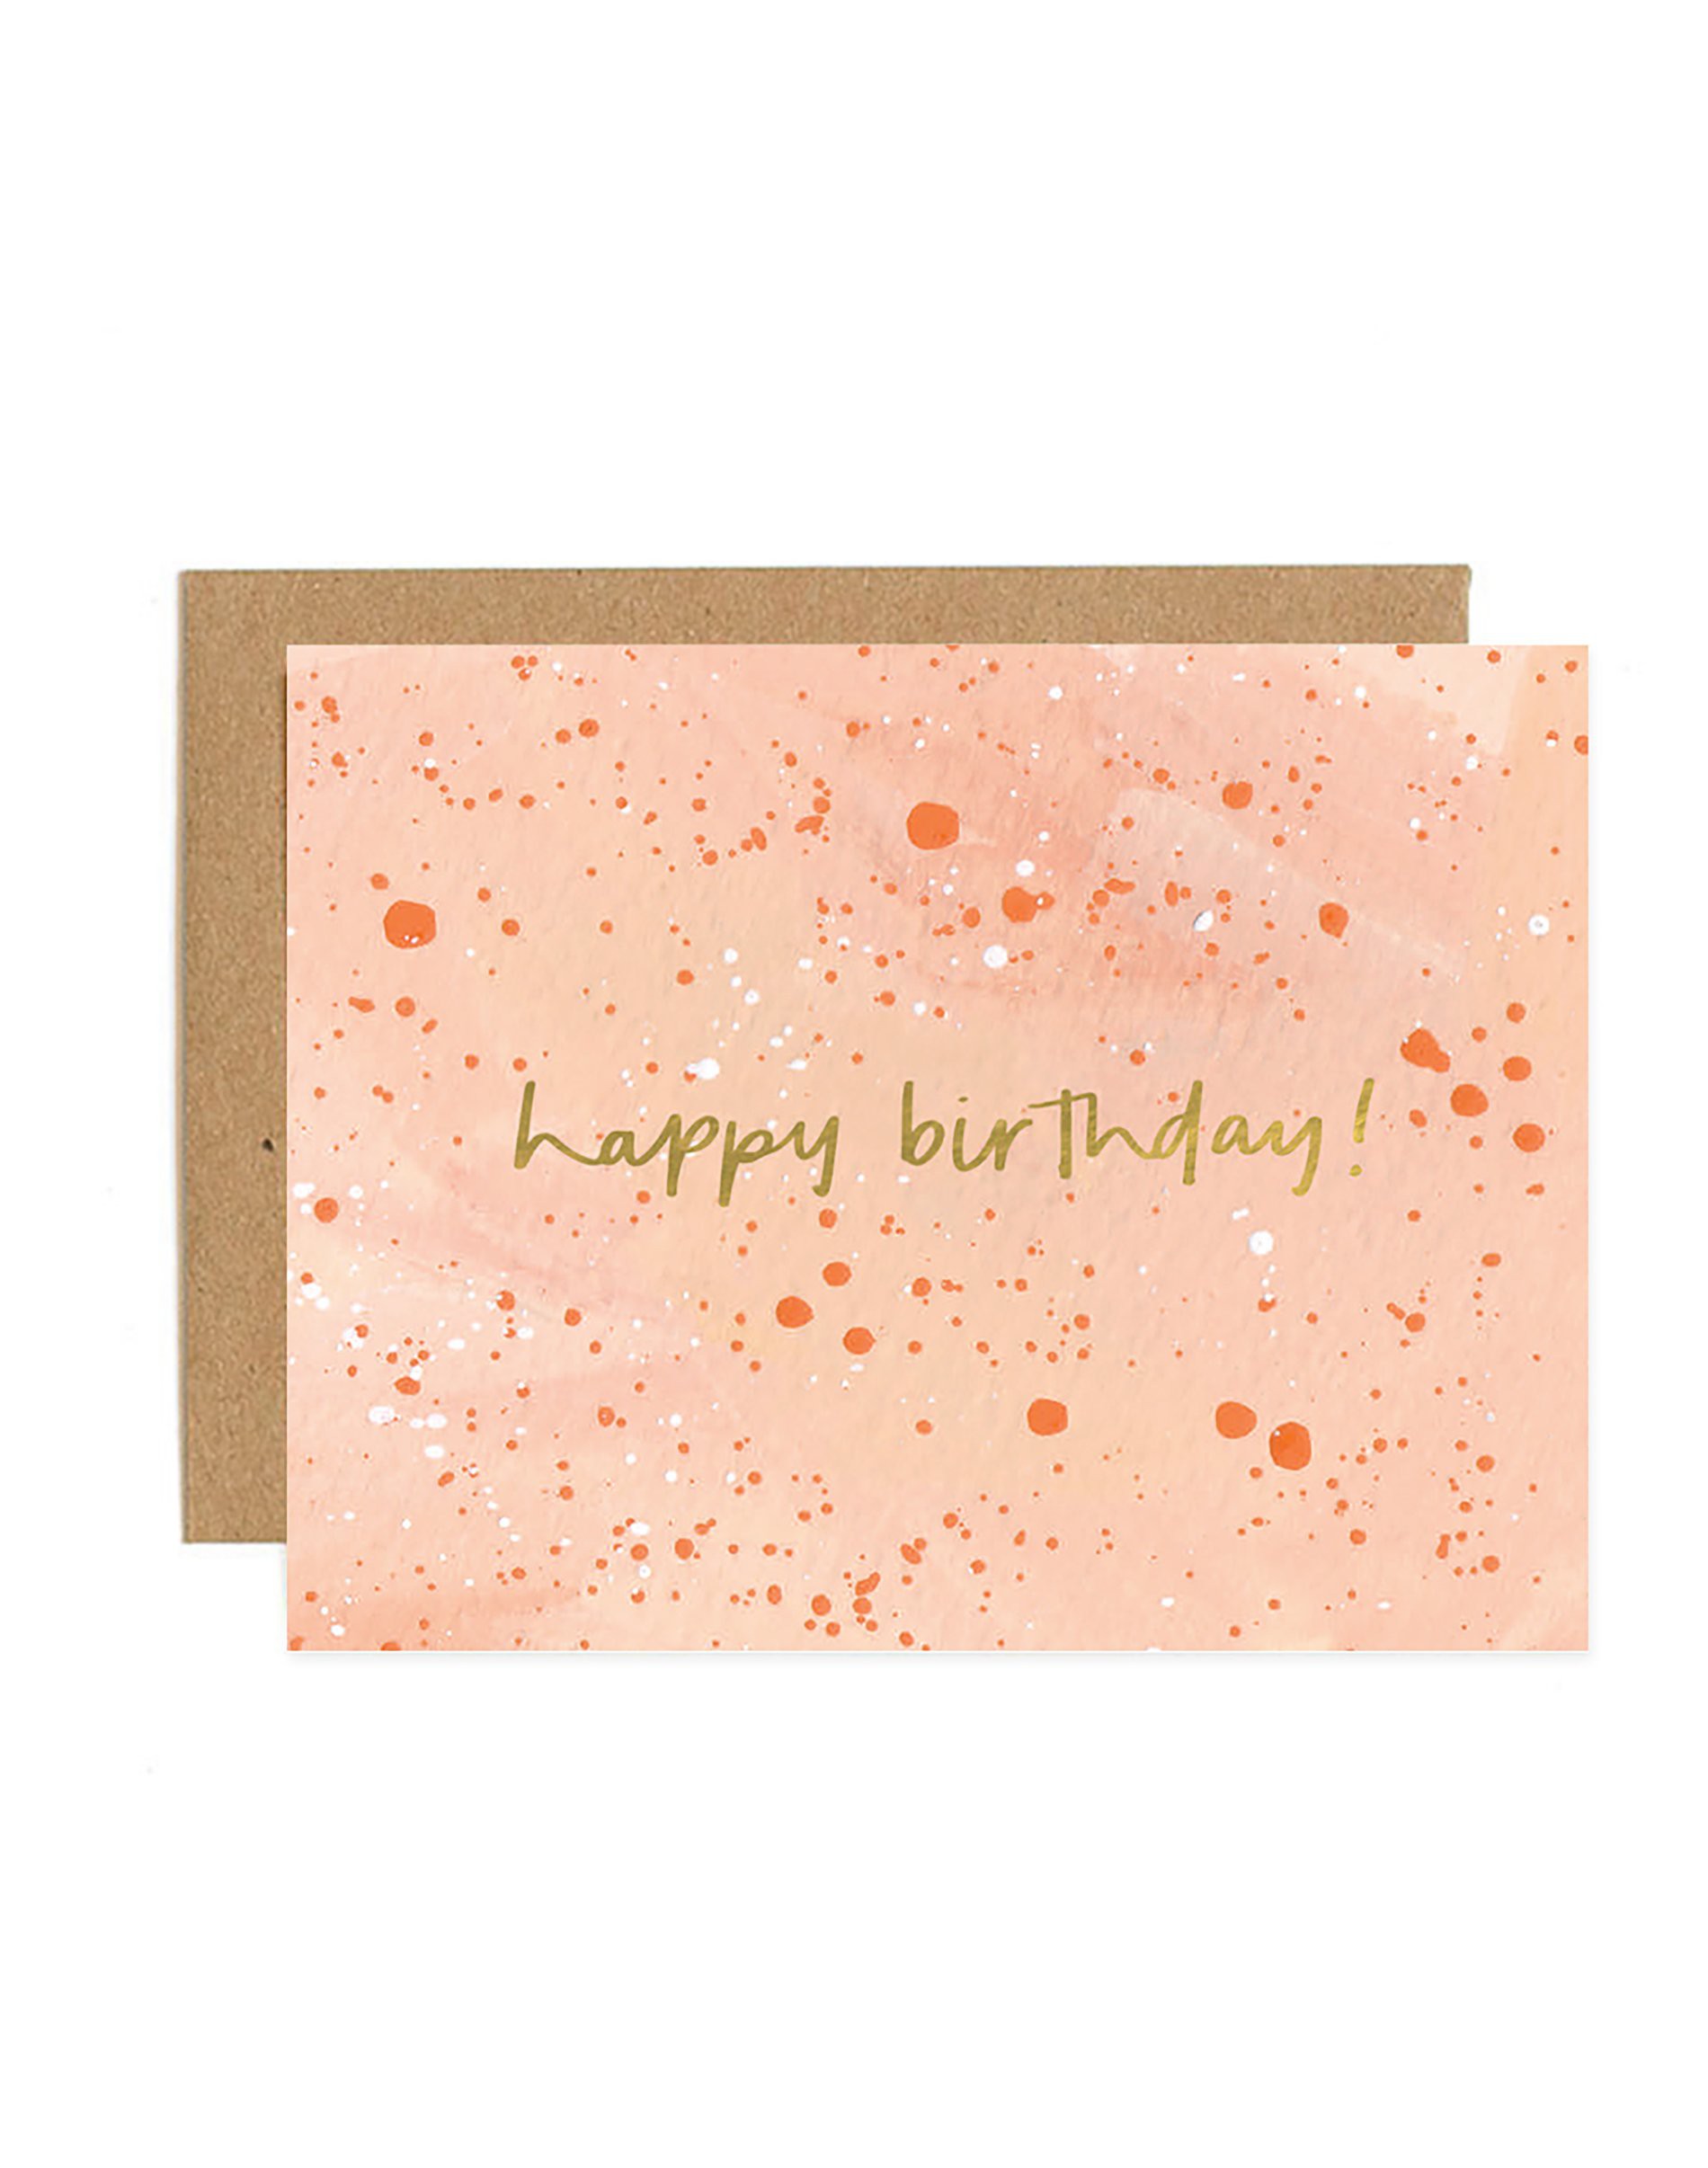 Speckled Zinnia Birthday Greeting Card - 1canoe2